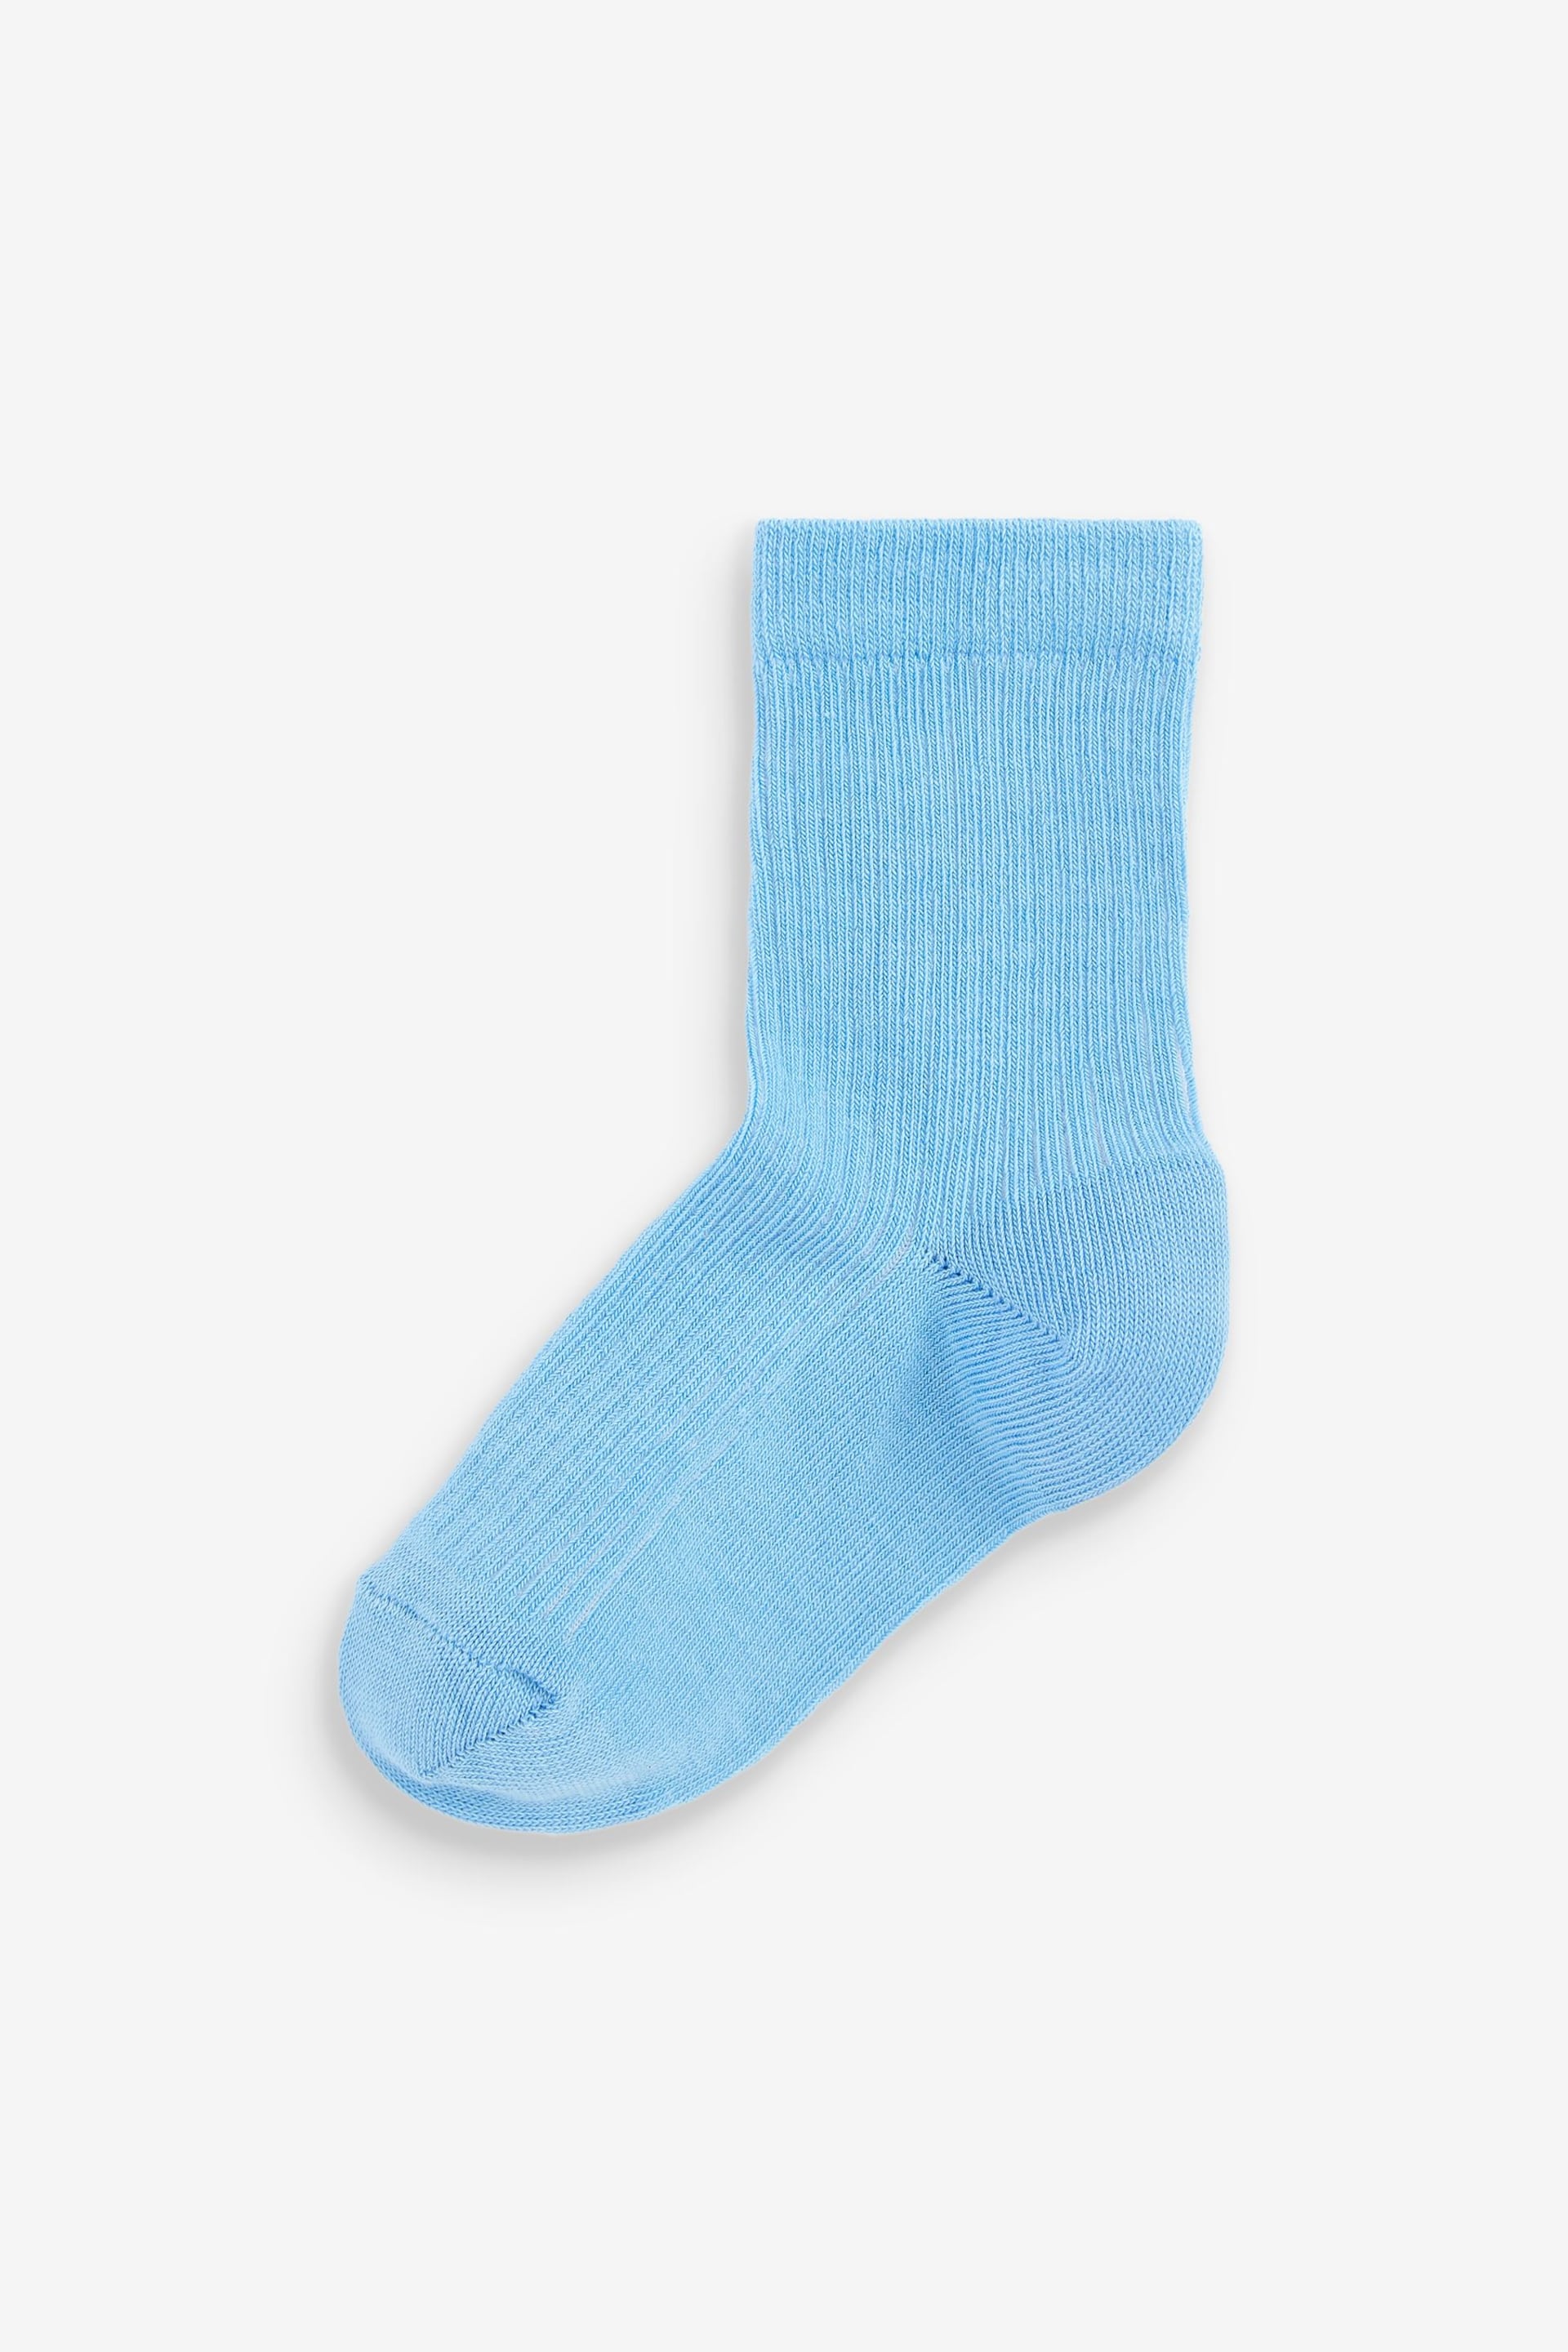 Blue/Navy Cotton Rich Fine Rib Socks 7 Pack - Image 5 of 8